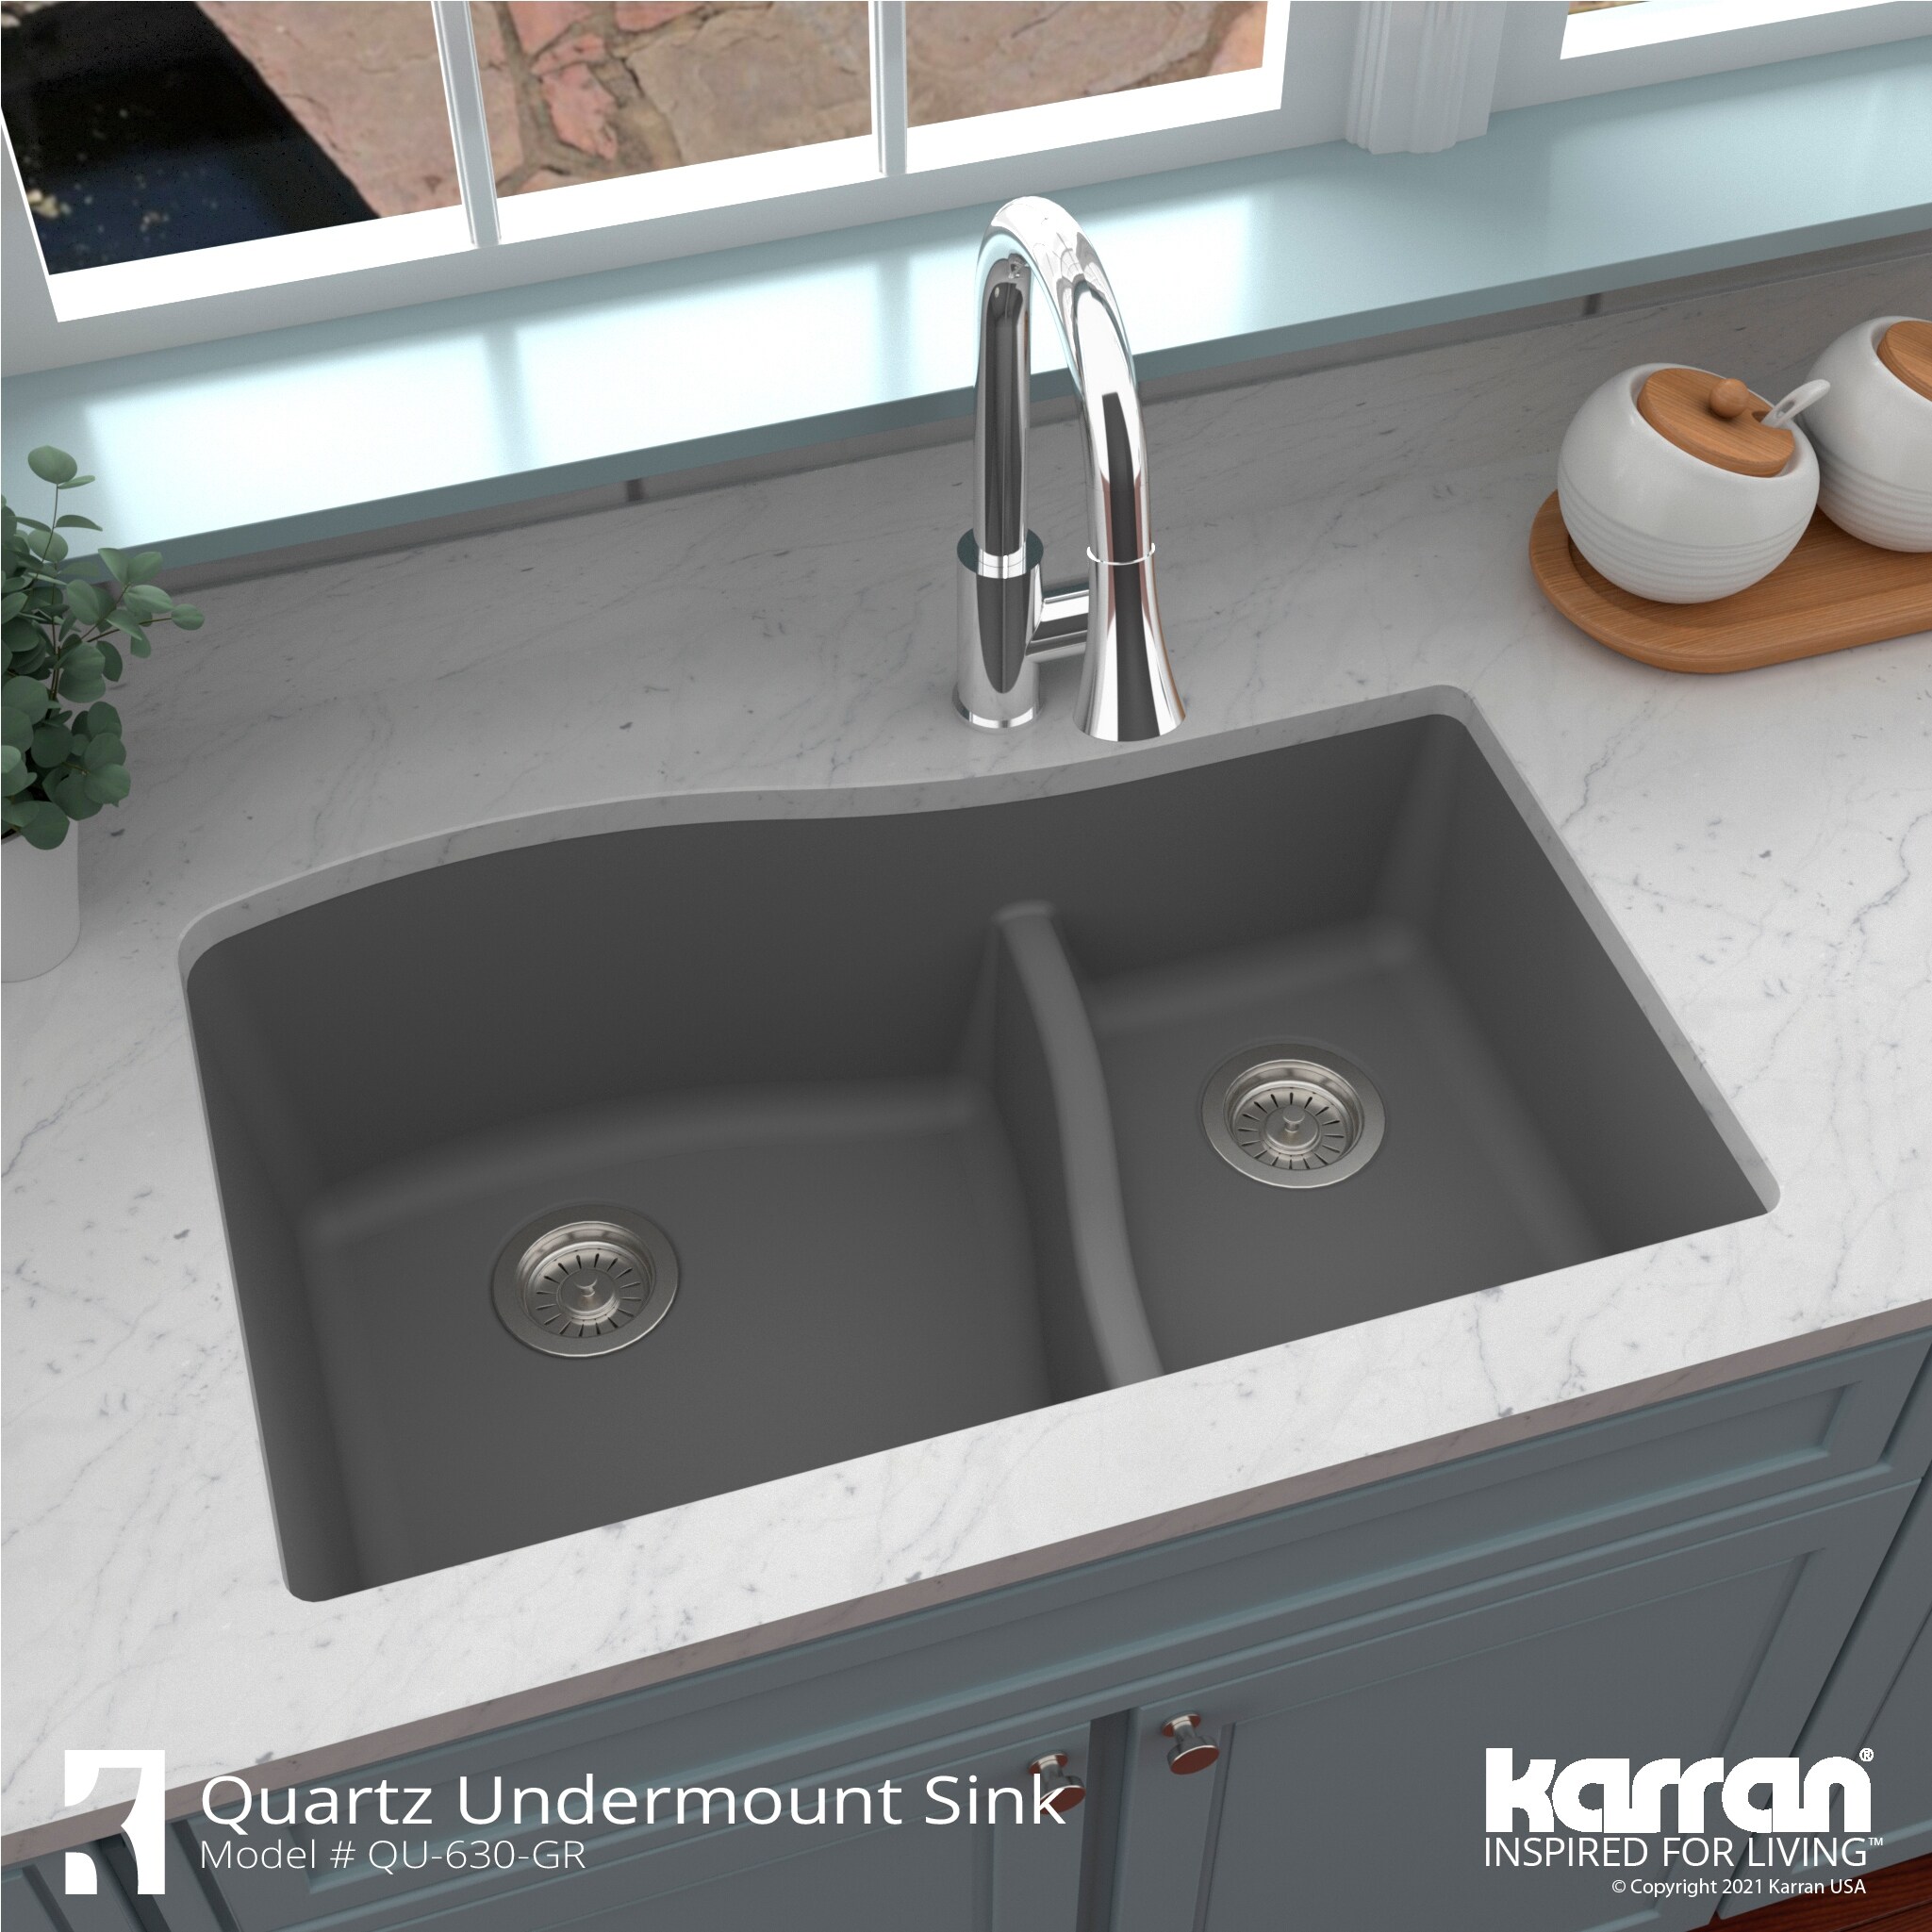 https://ak1.ostkcdn.com/images/products/is/images/direct/bc3785b9f5b8fe93d9cb2013f9146bf47f75d3b1/Karran-Undermount-Quartz-Double-bowl-Kitchen-Sink.jpg